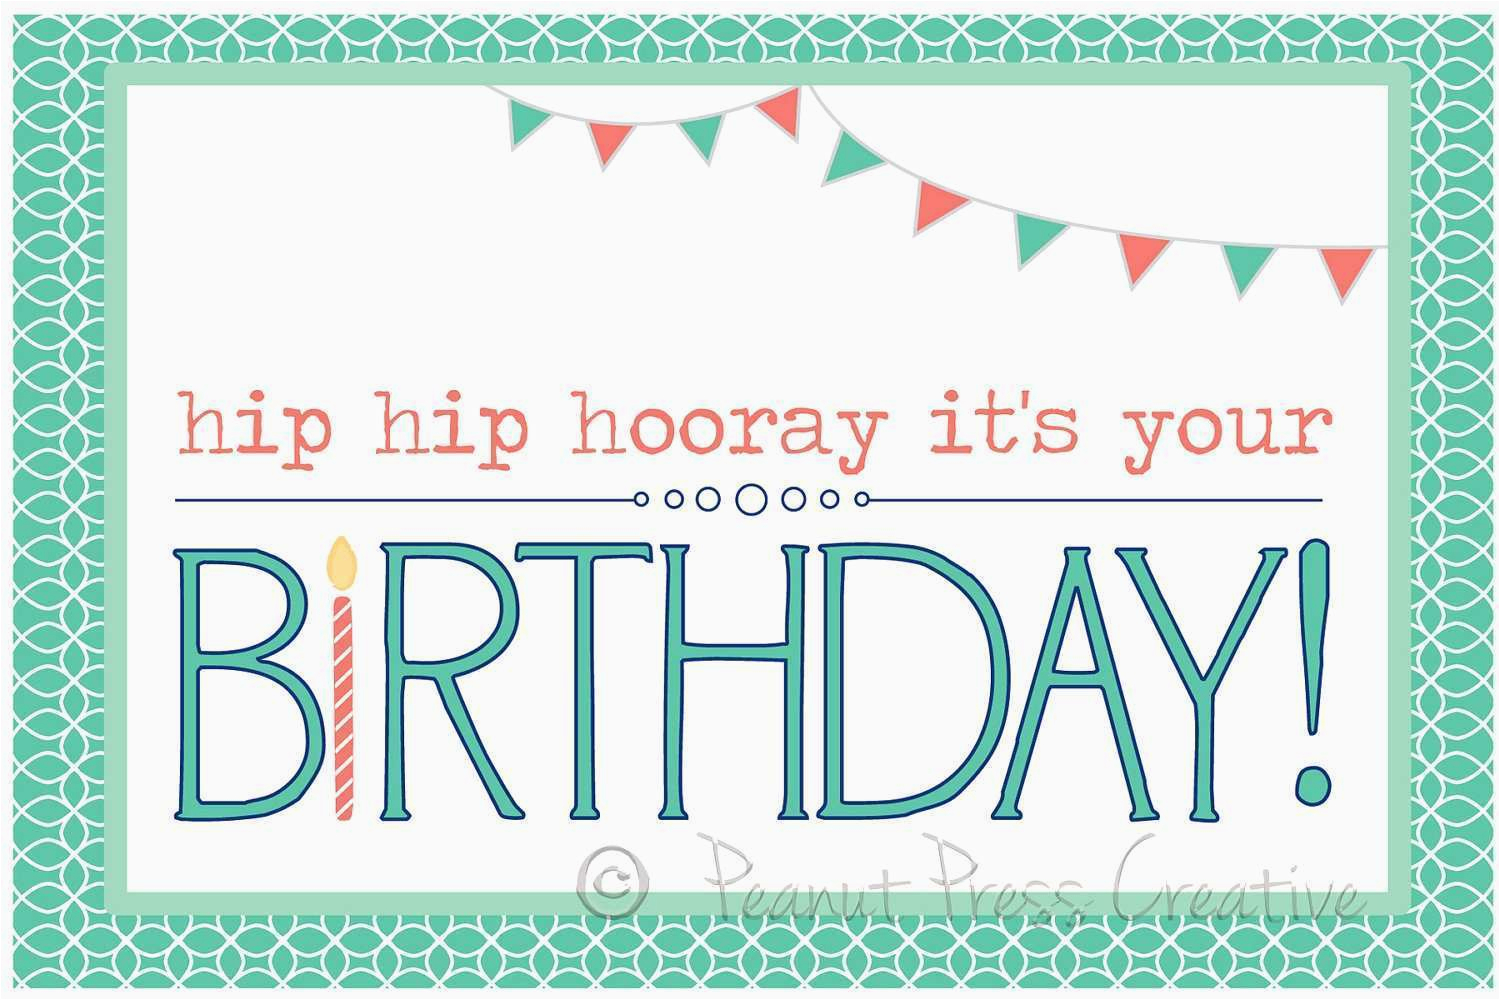 Free Printable Personalised Birthday Cards Free Personalized Birthday Cards New Free Greeting Card